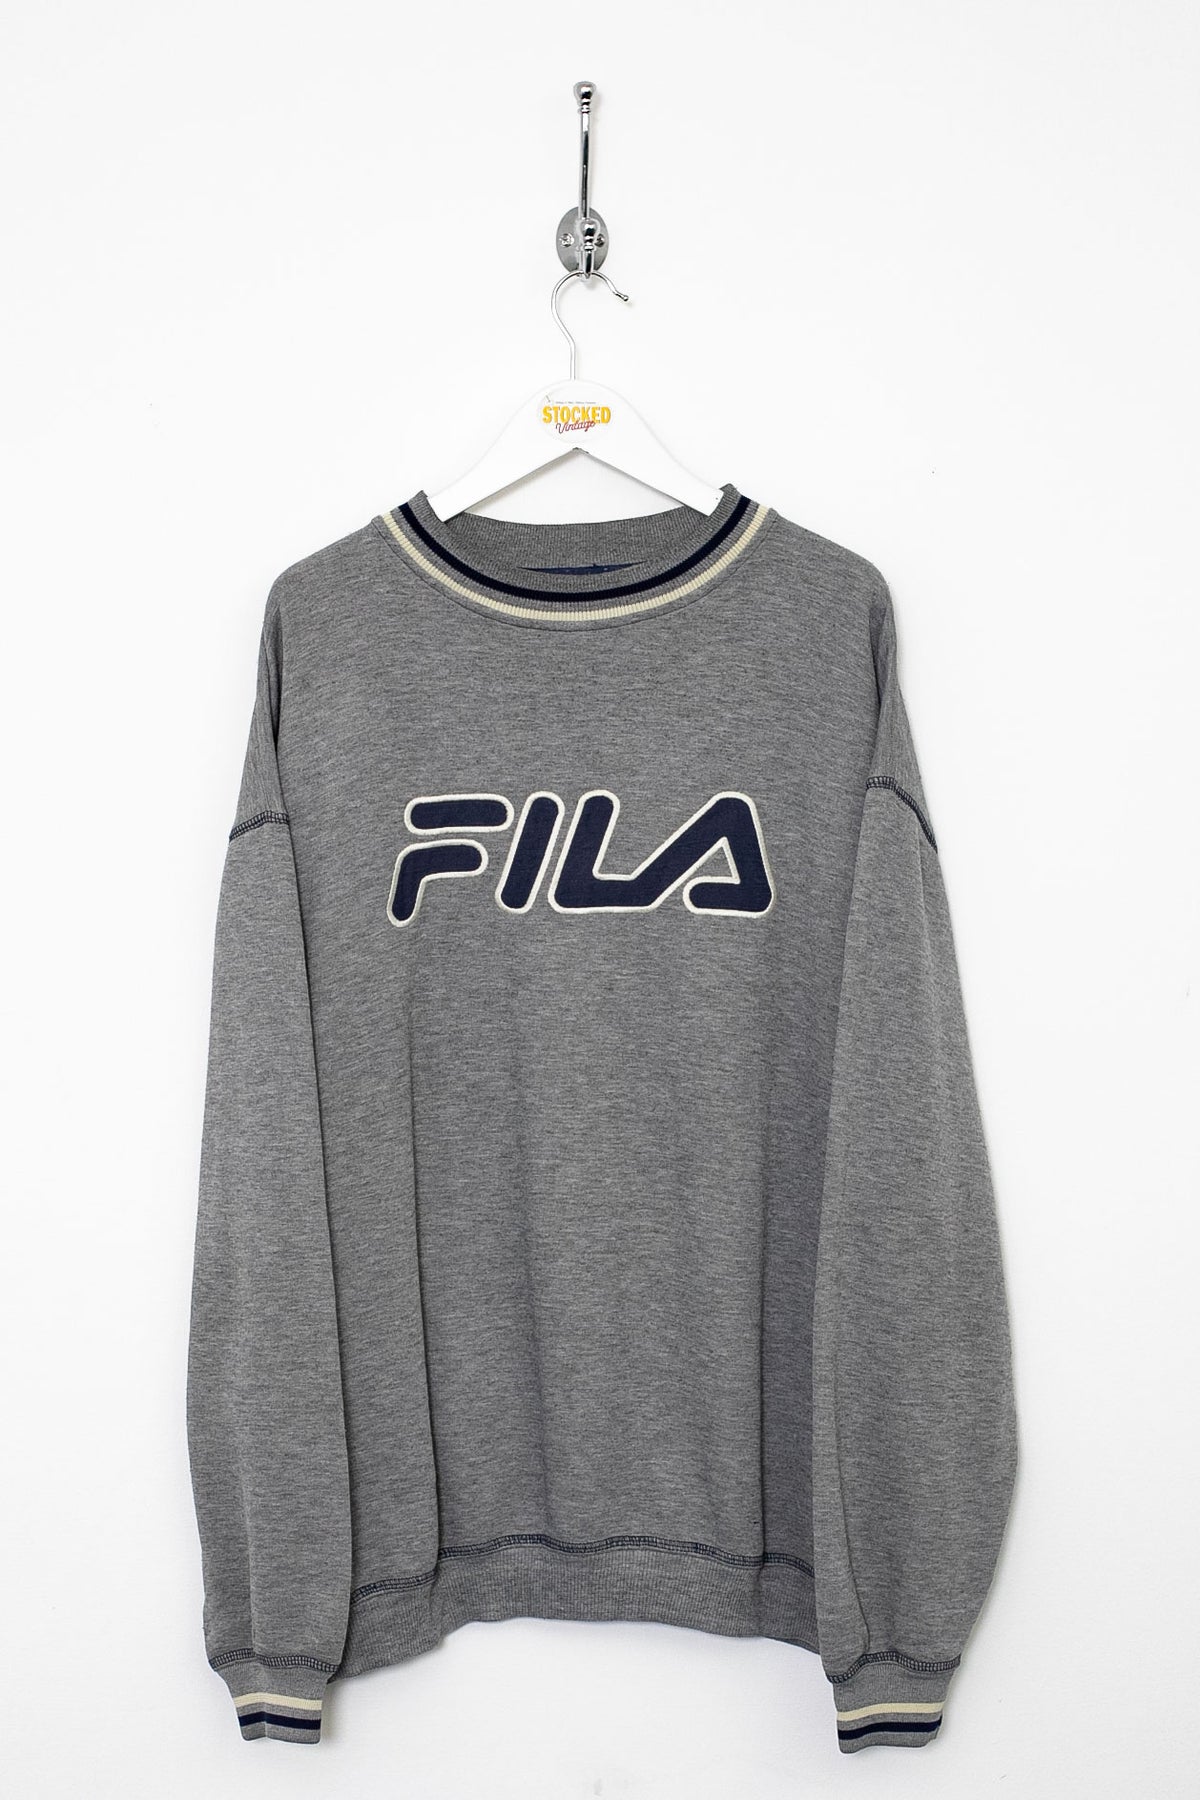 00s Fila Sweatshirt (XL)